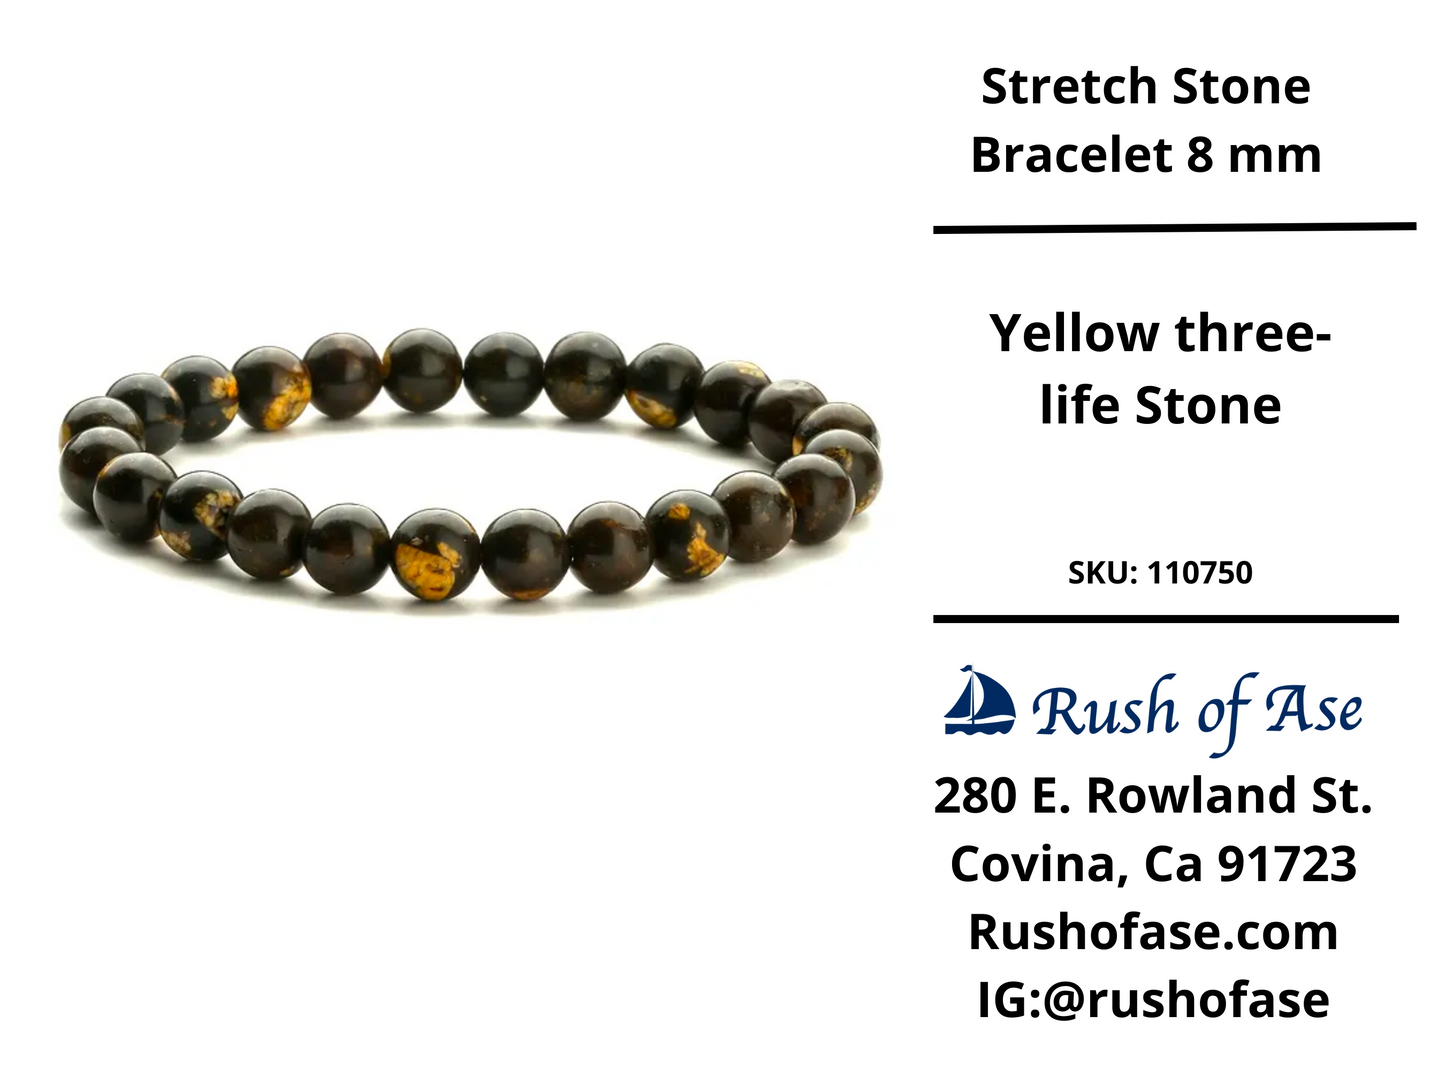 Stone Bracelet 8mm | Stretch Stone Bracelet